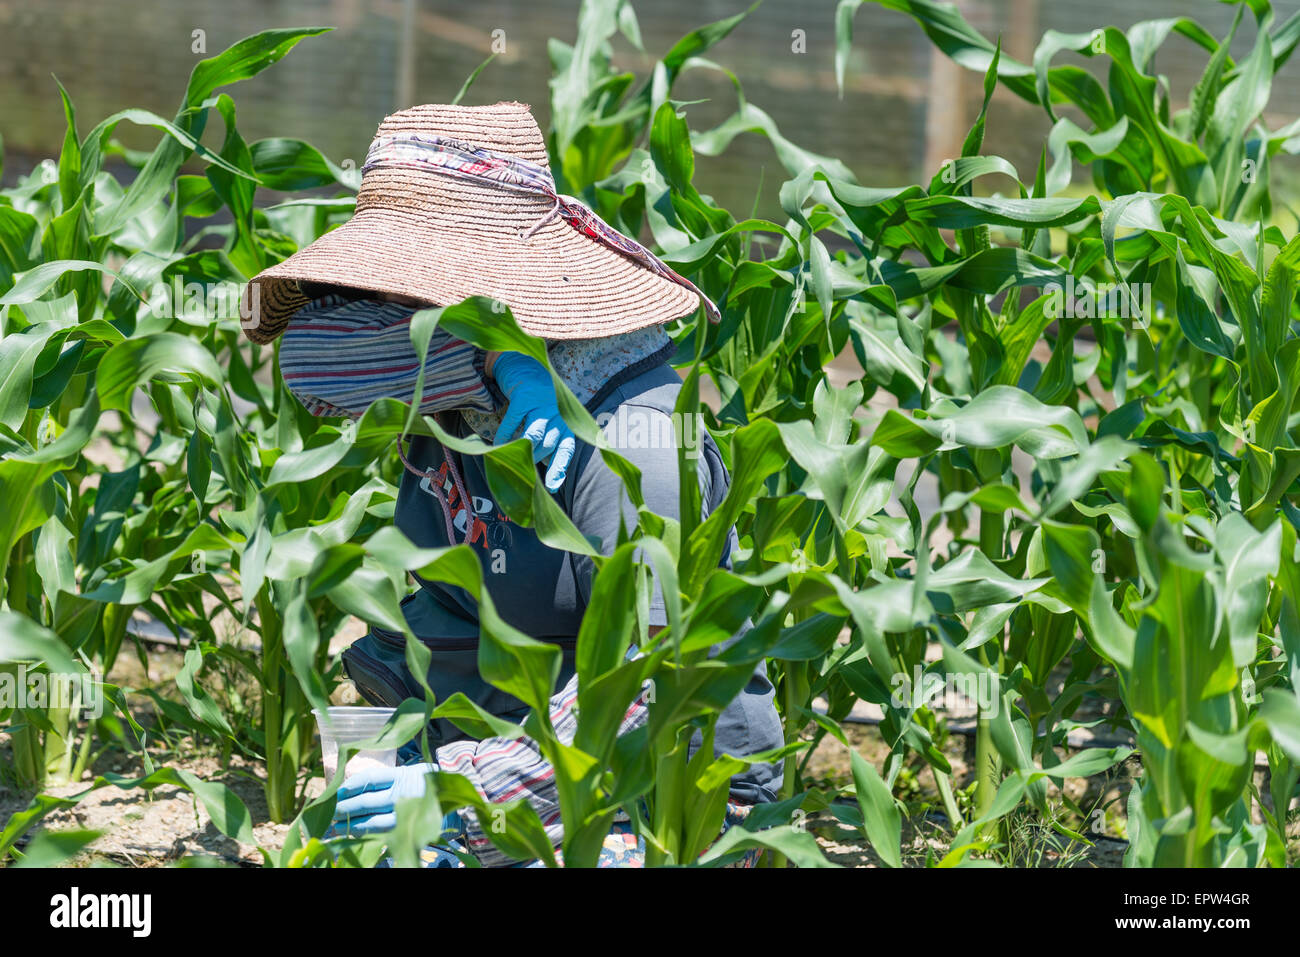 An elderly Japanese woman working in her field growing corn. Stock Photo